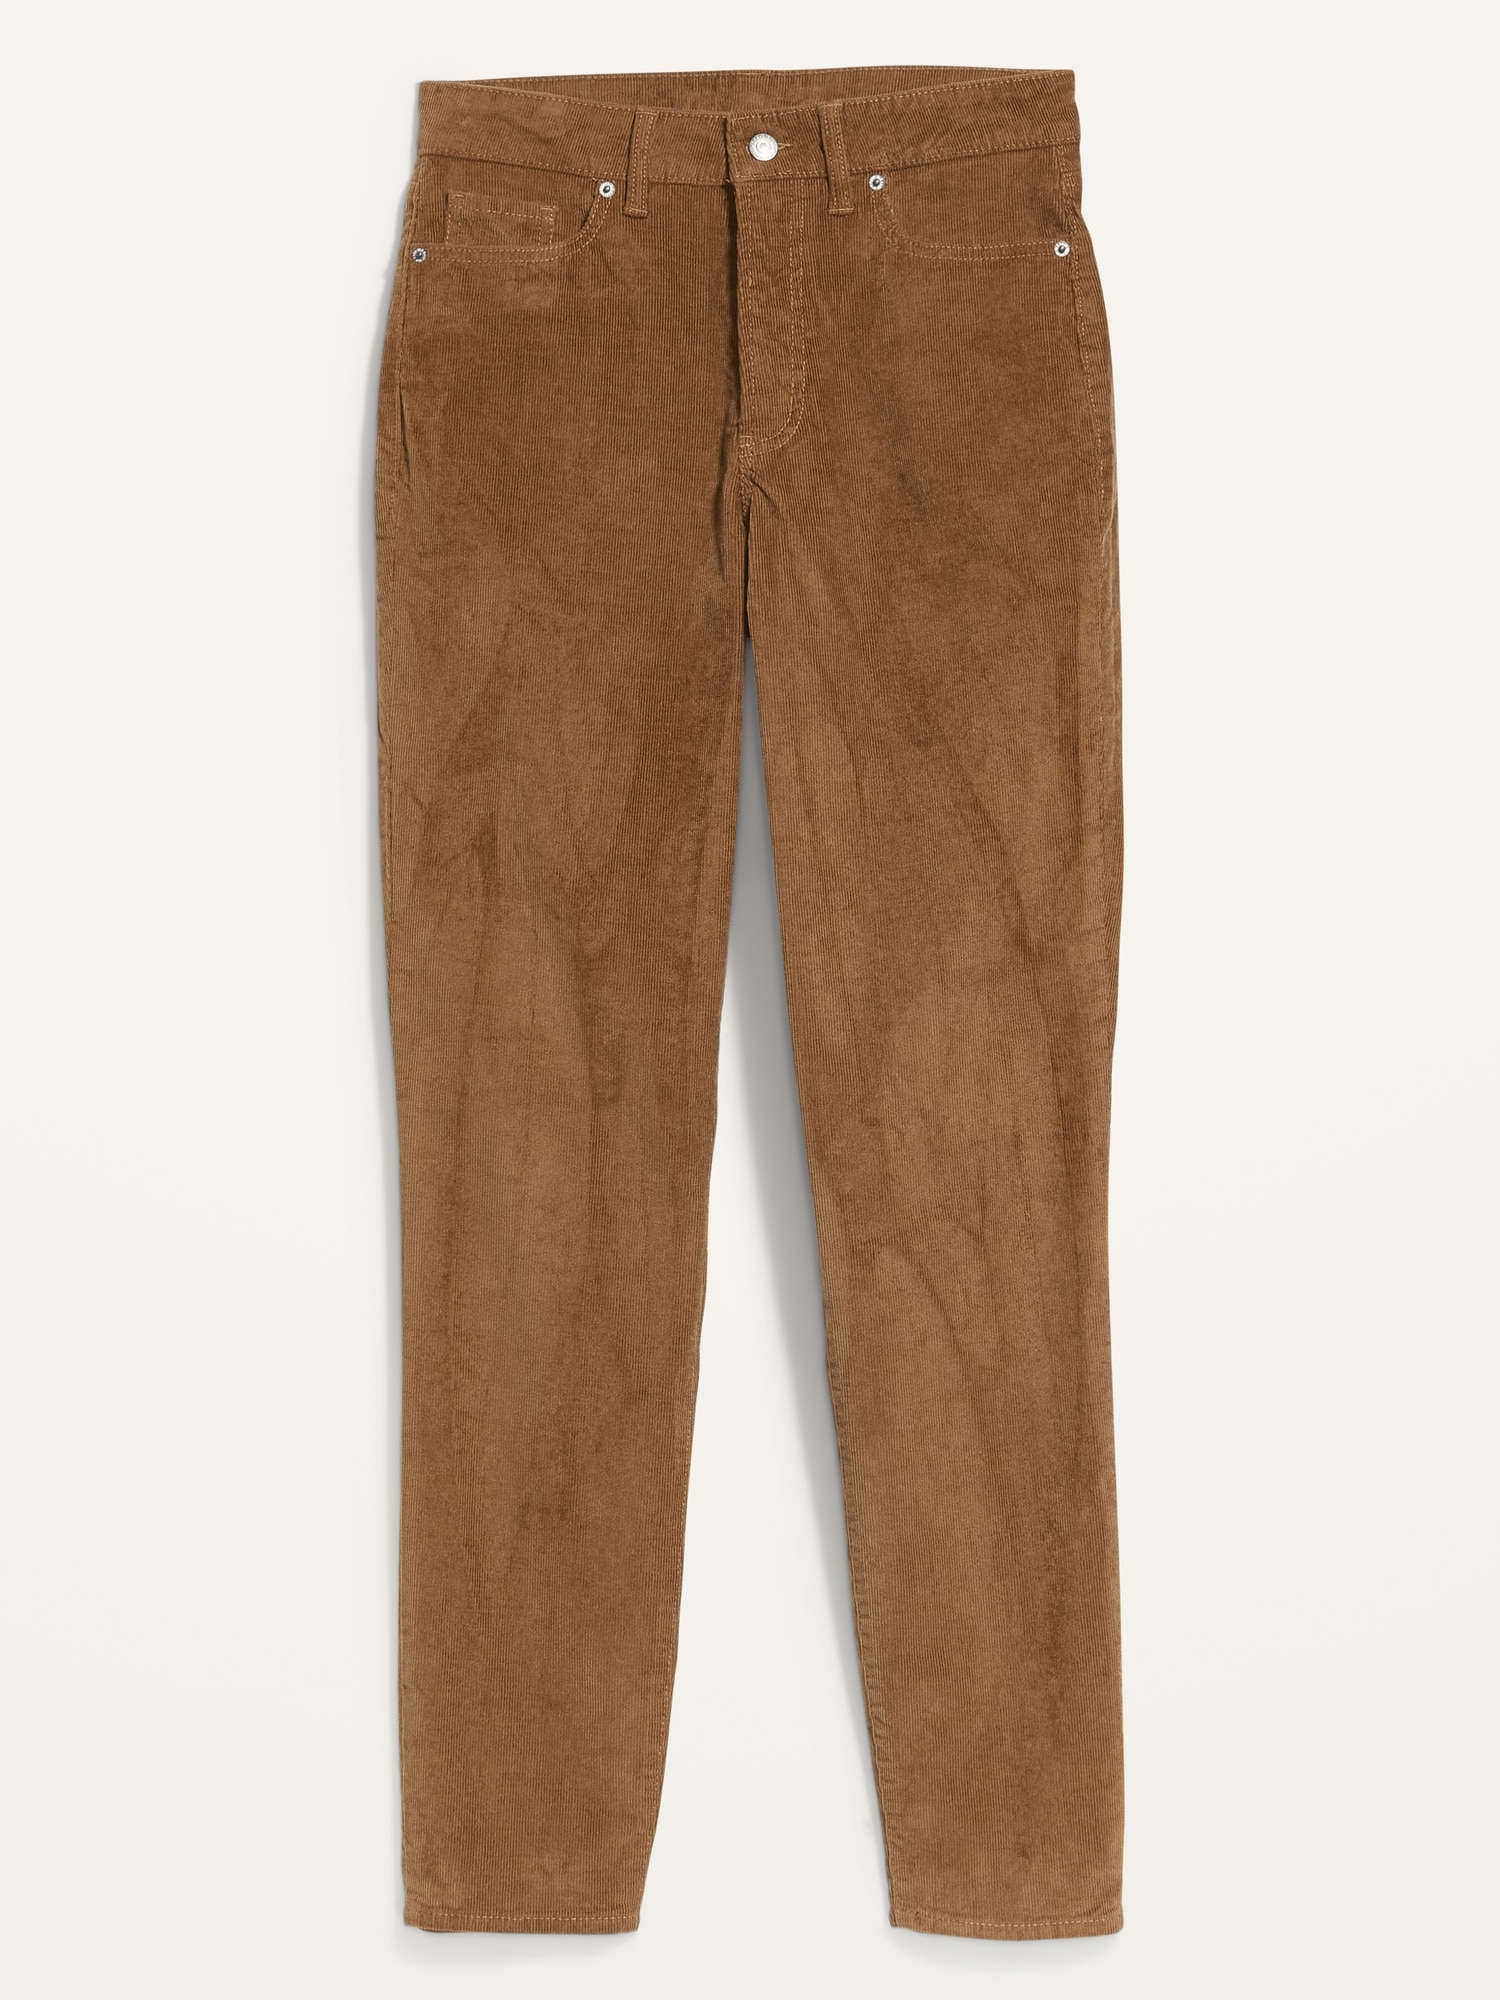 Men's Regular Fit Ankle Length Pants - Original Use™ Brown S